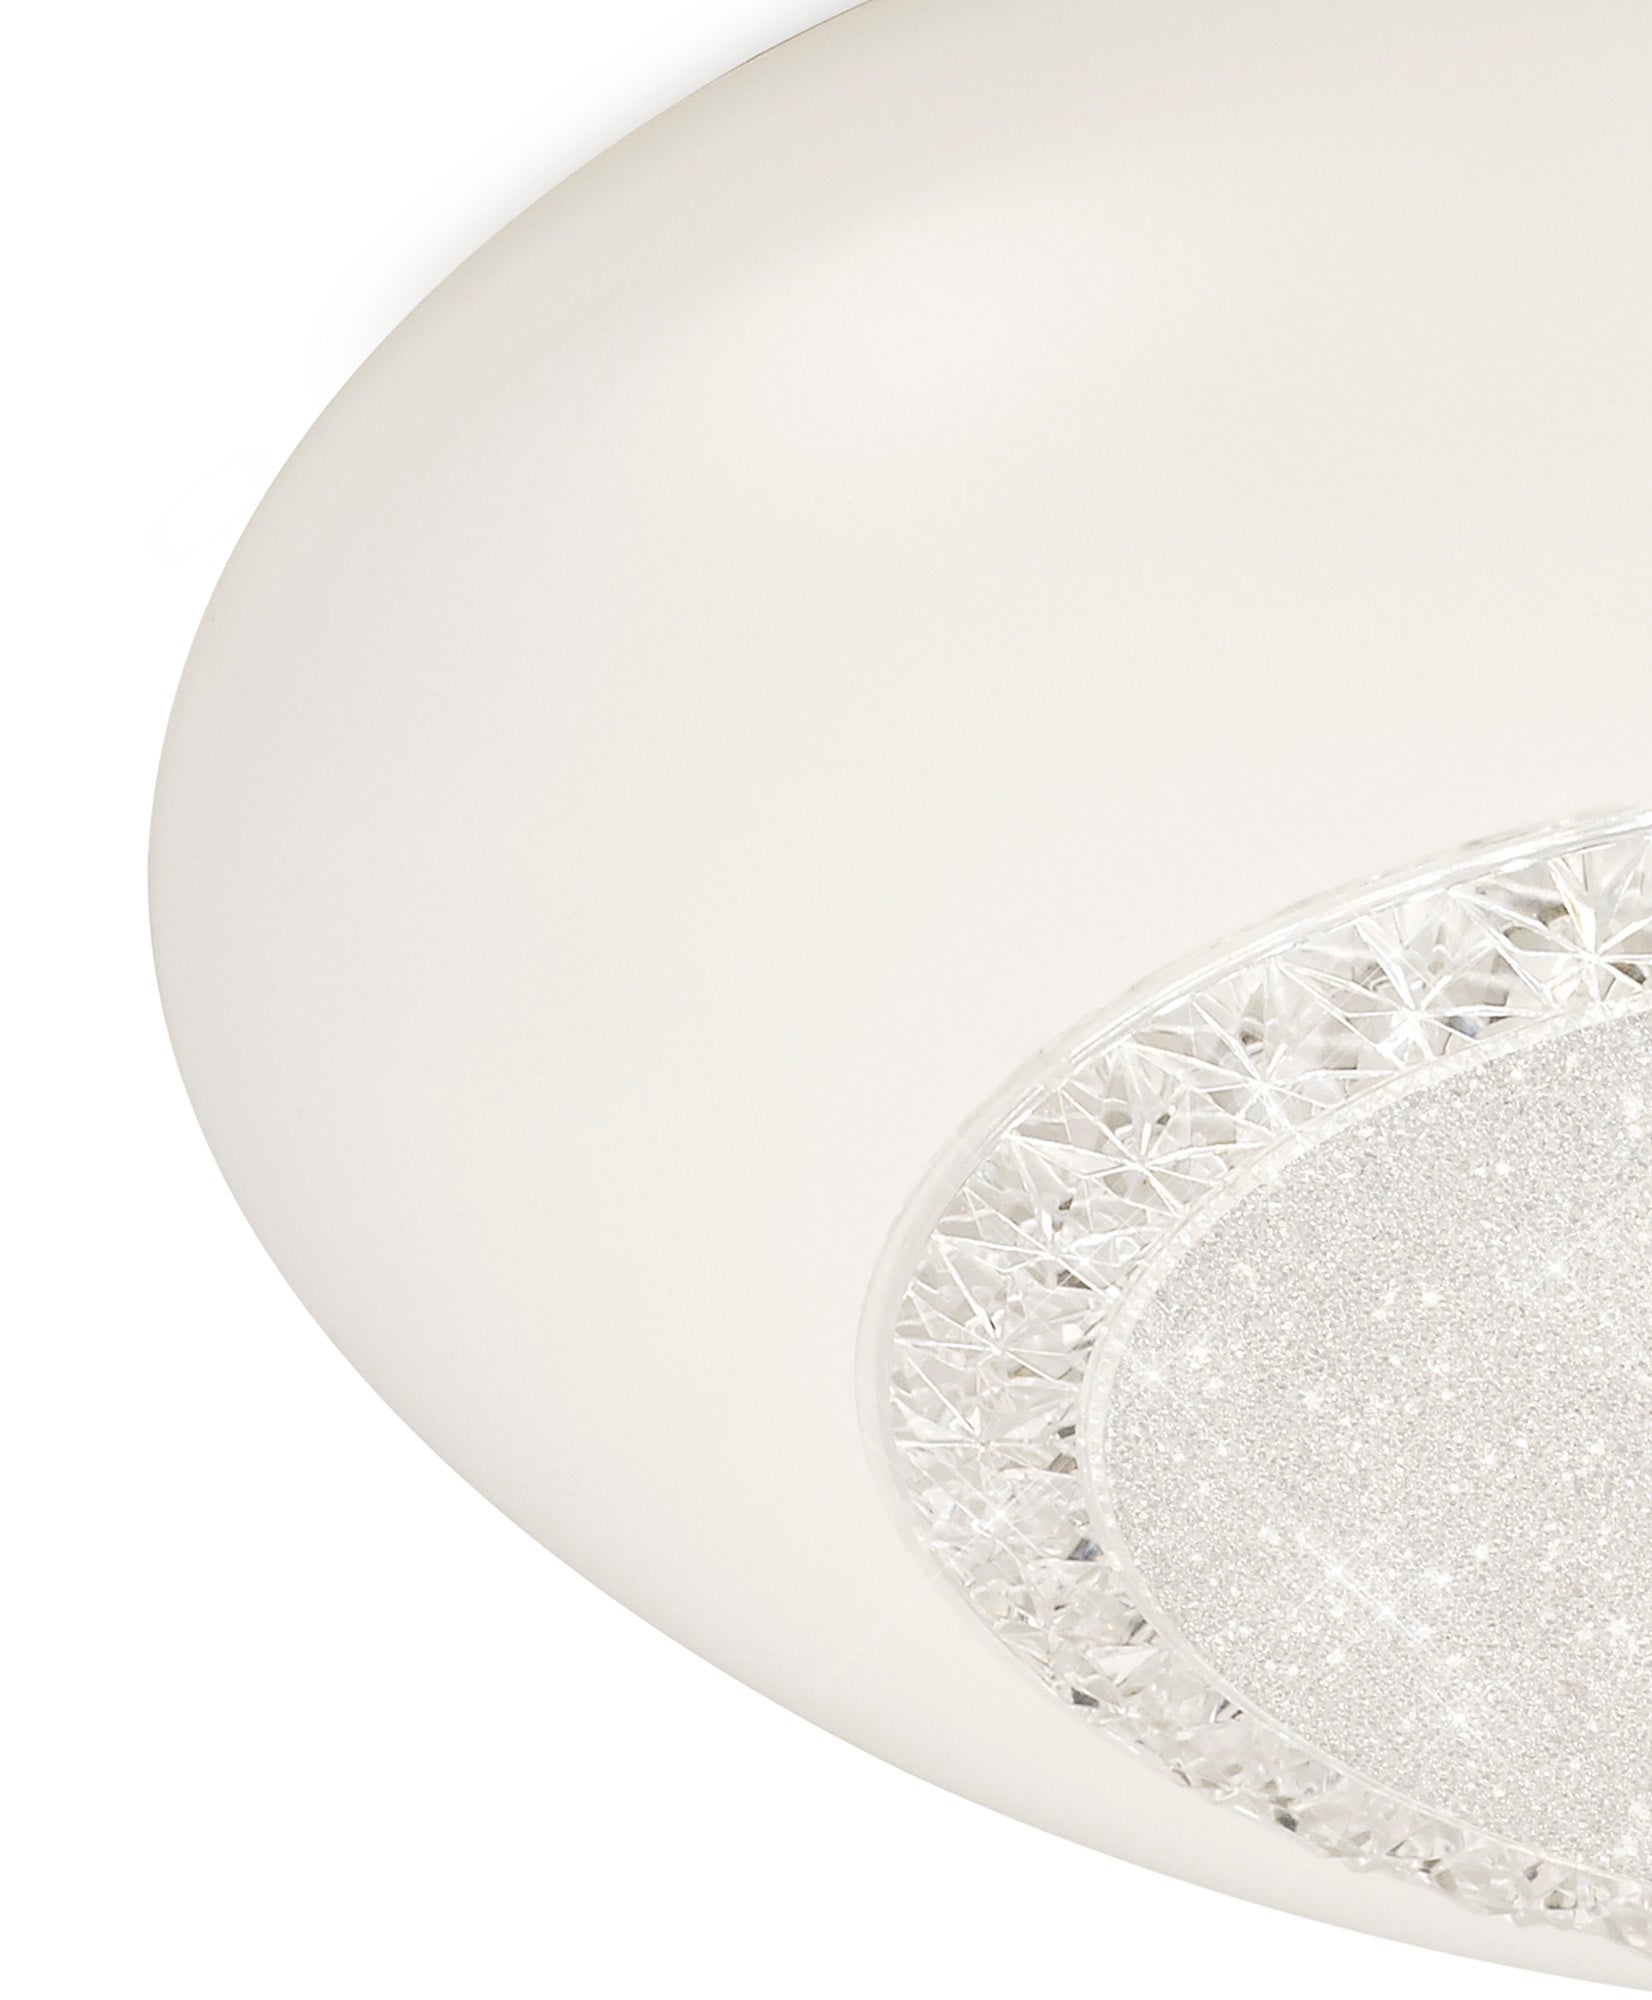 M6235 Mantra Opera Crystal LED Ceiling Flush White